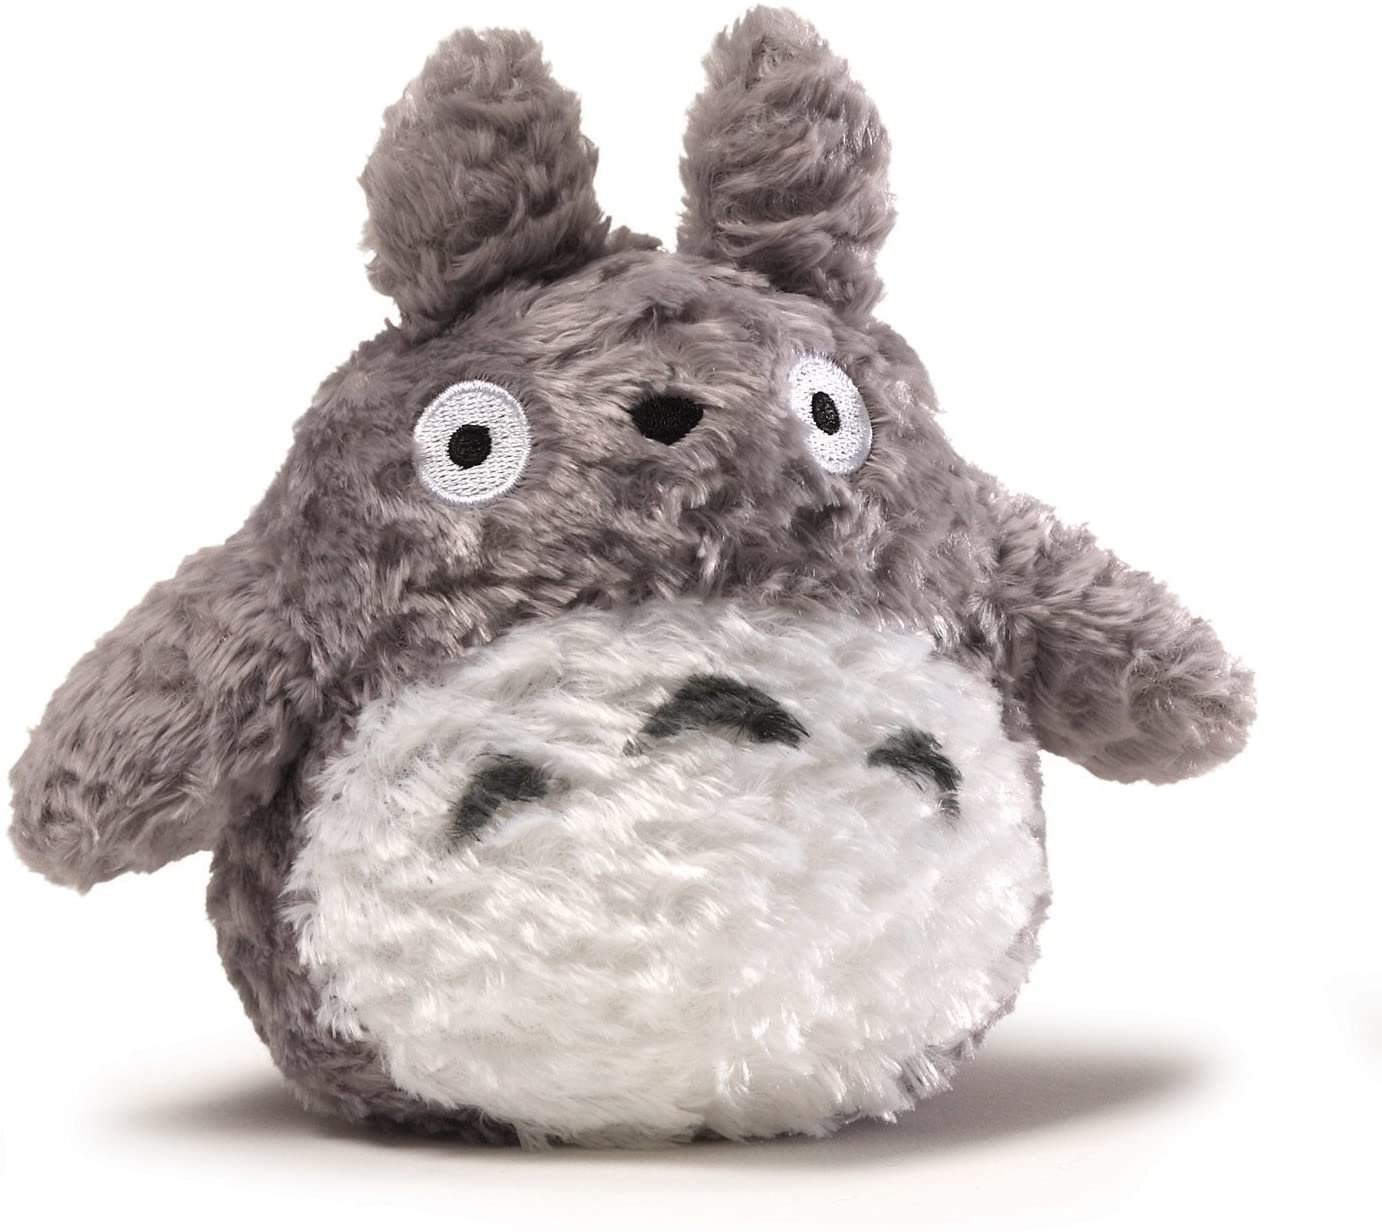 Totoro Fluffy Plush, My Neighbor Totoro, 6, Studio Ghibli